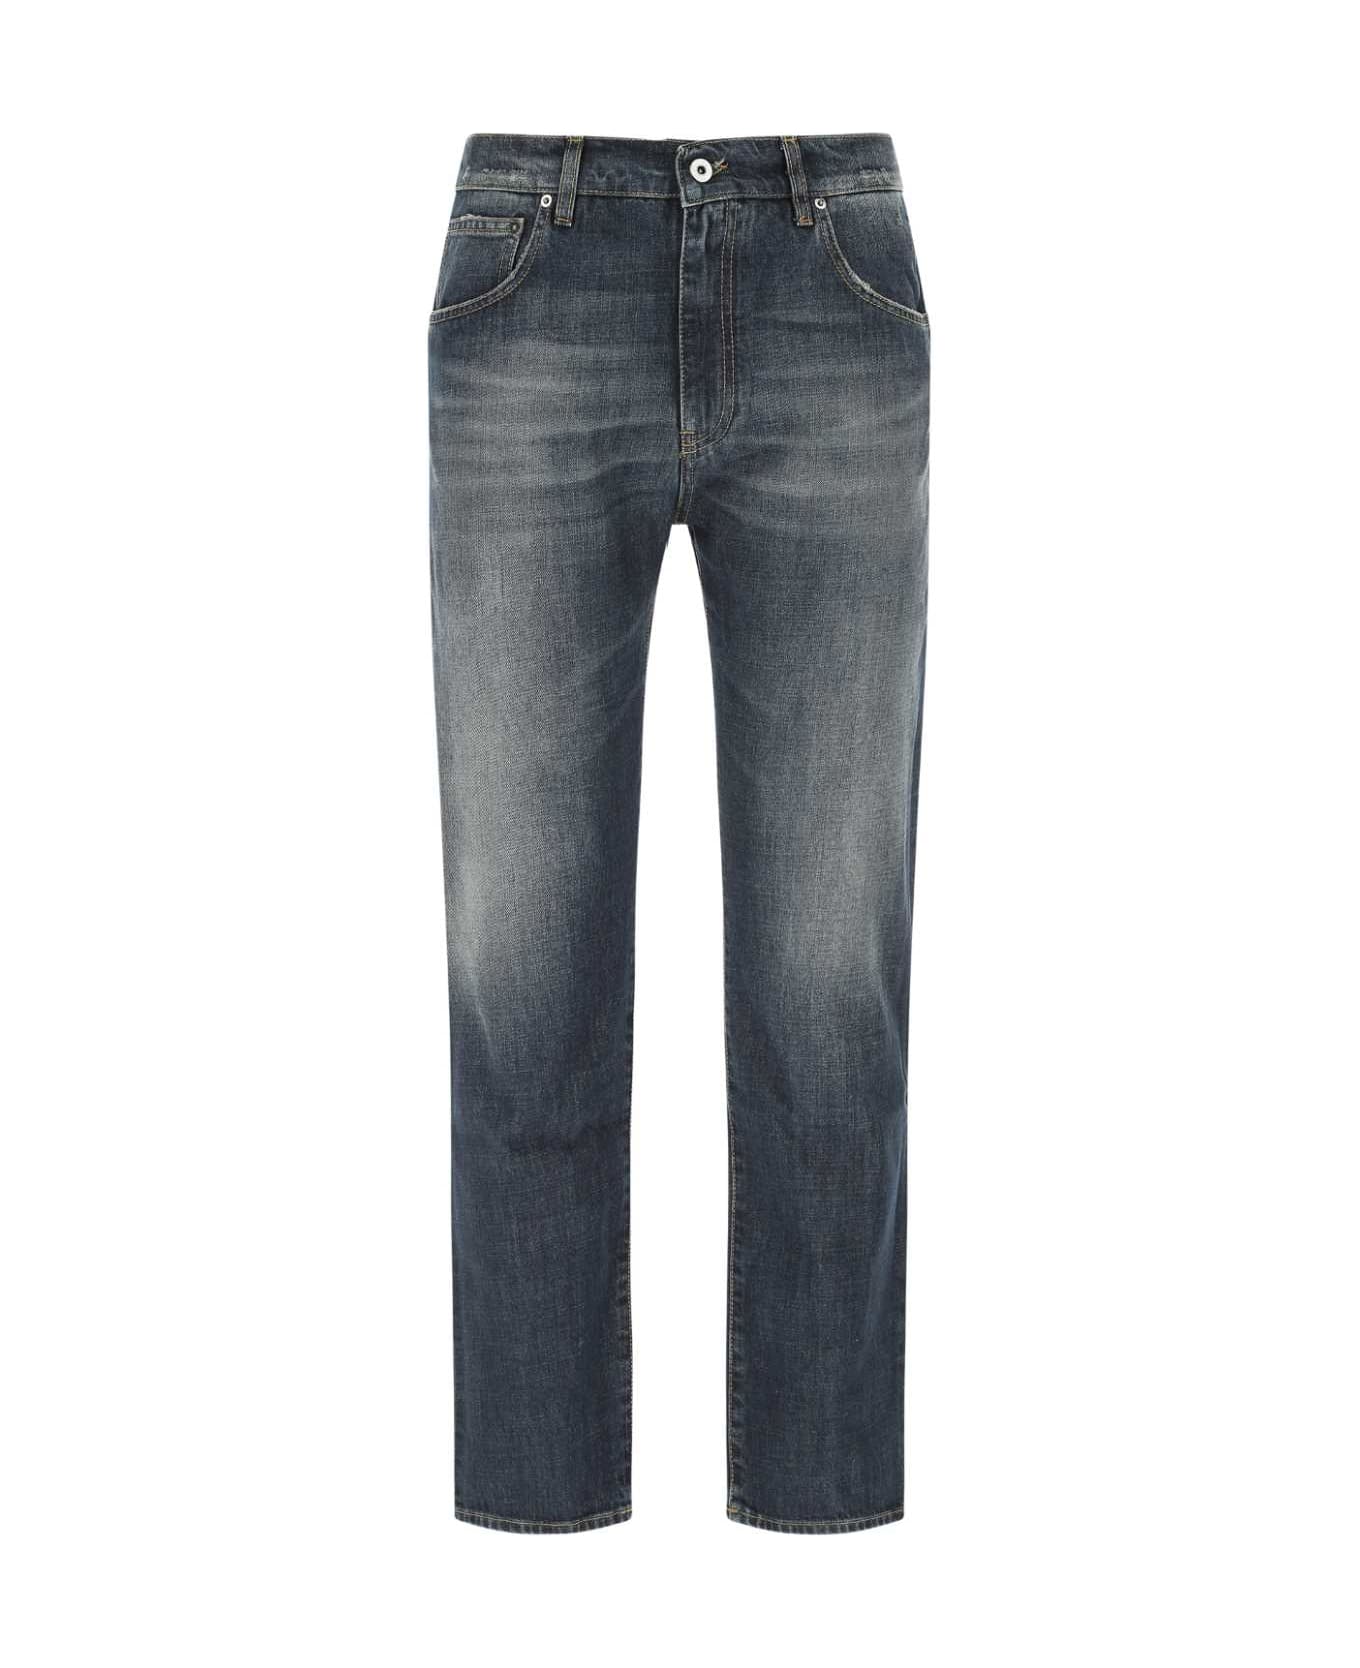 14 Bros Denim Cheswick Jeans - 9149